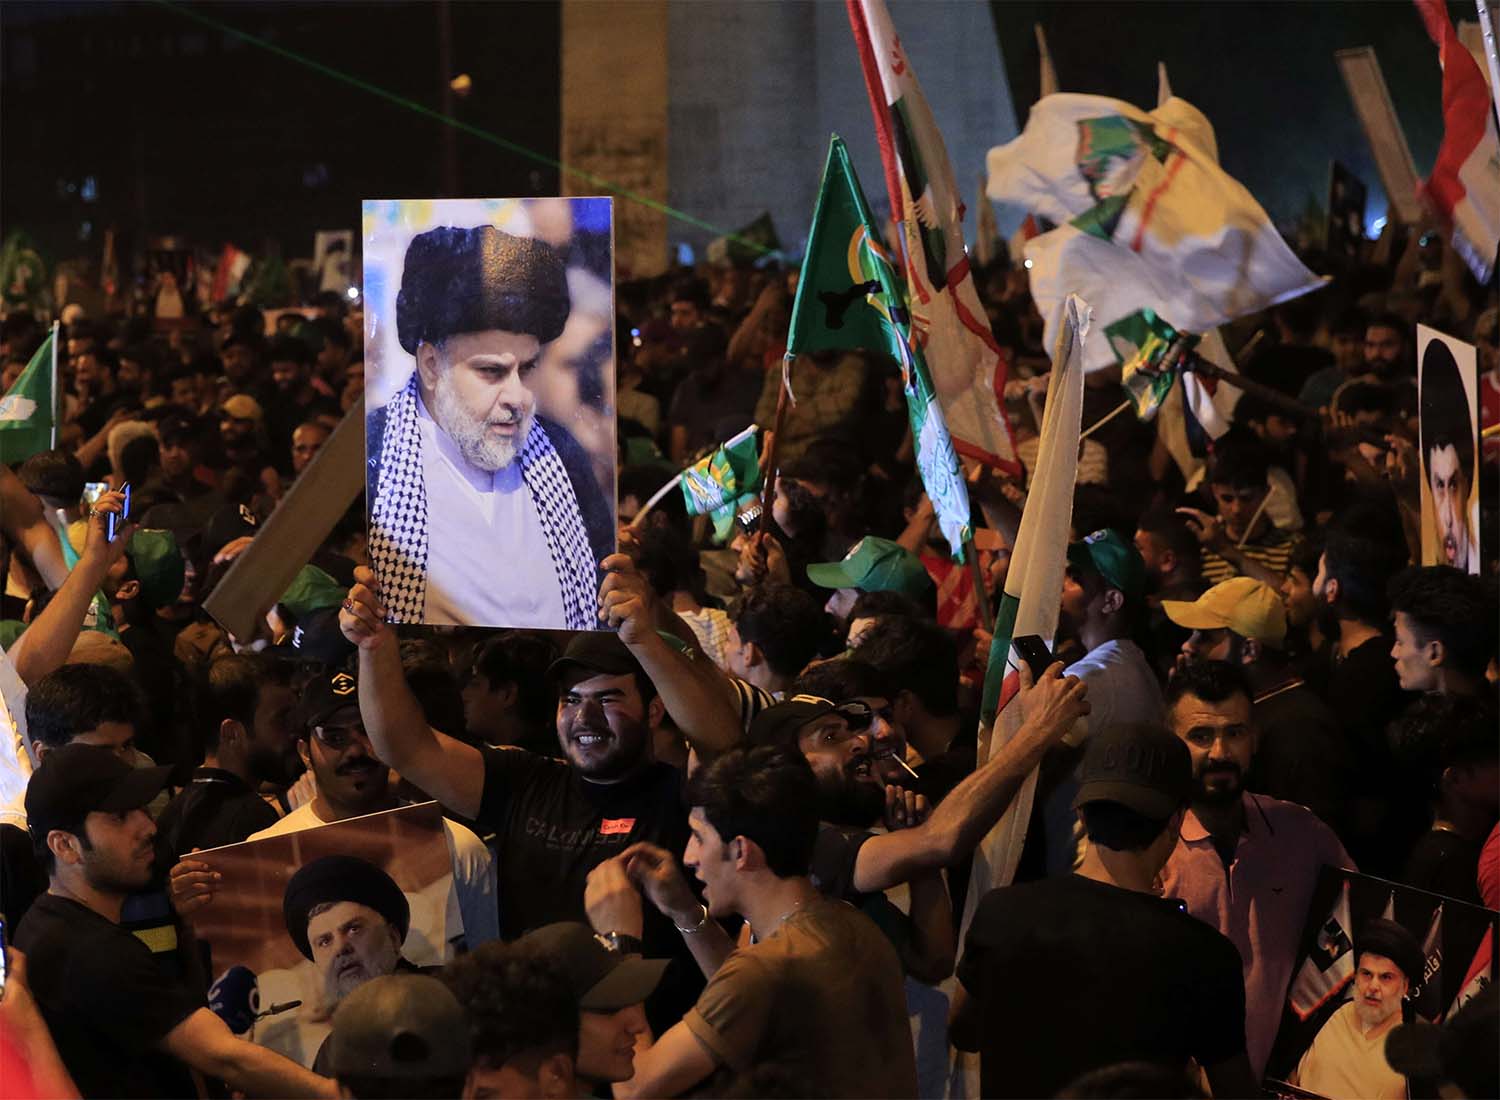 The Sairoon list of Shiite cleric Muqtada al-Sadr picked up to 20 additional seats